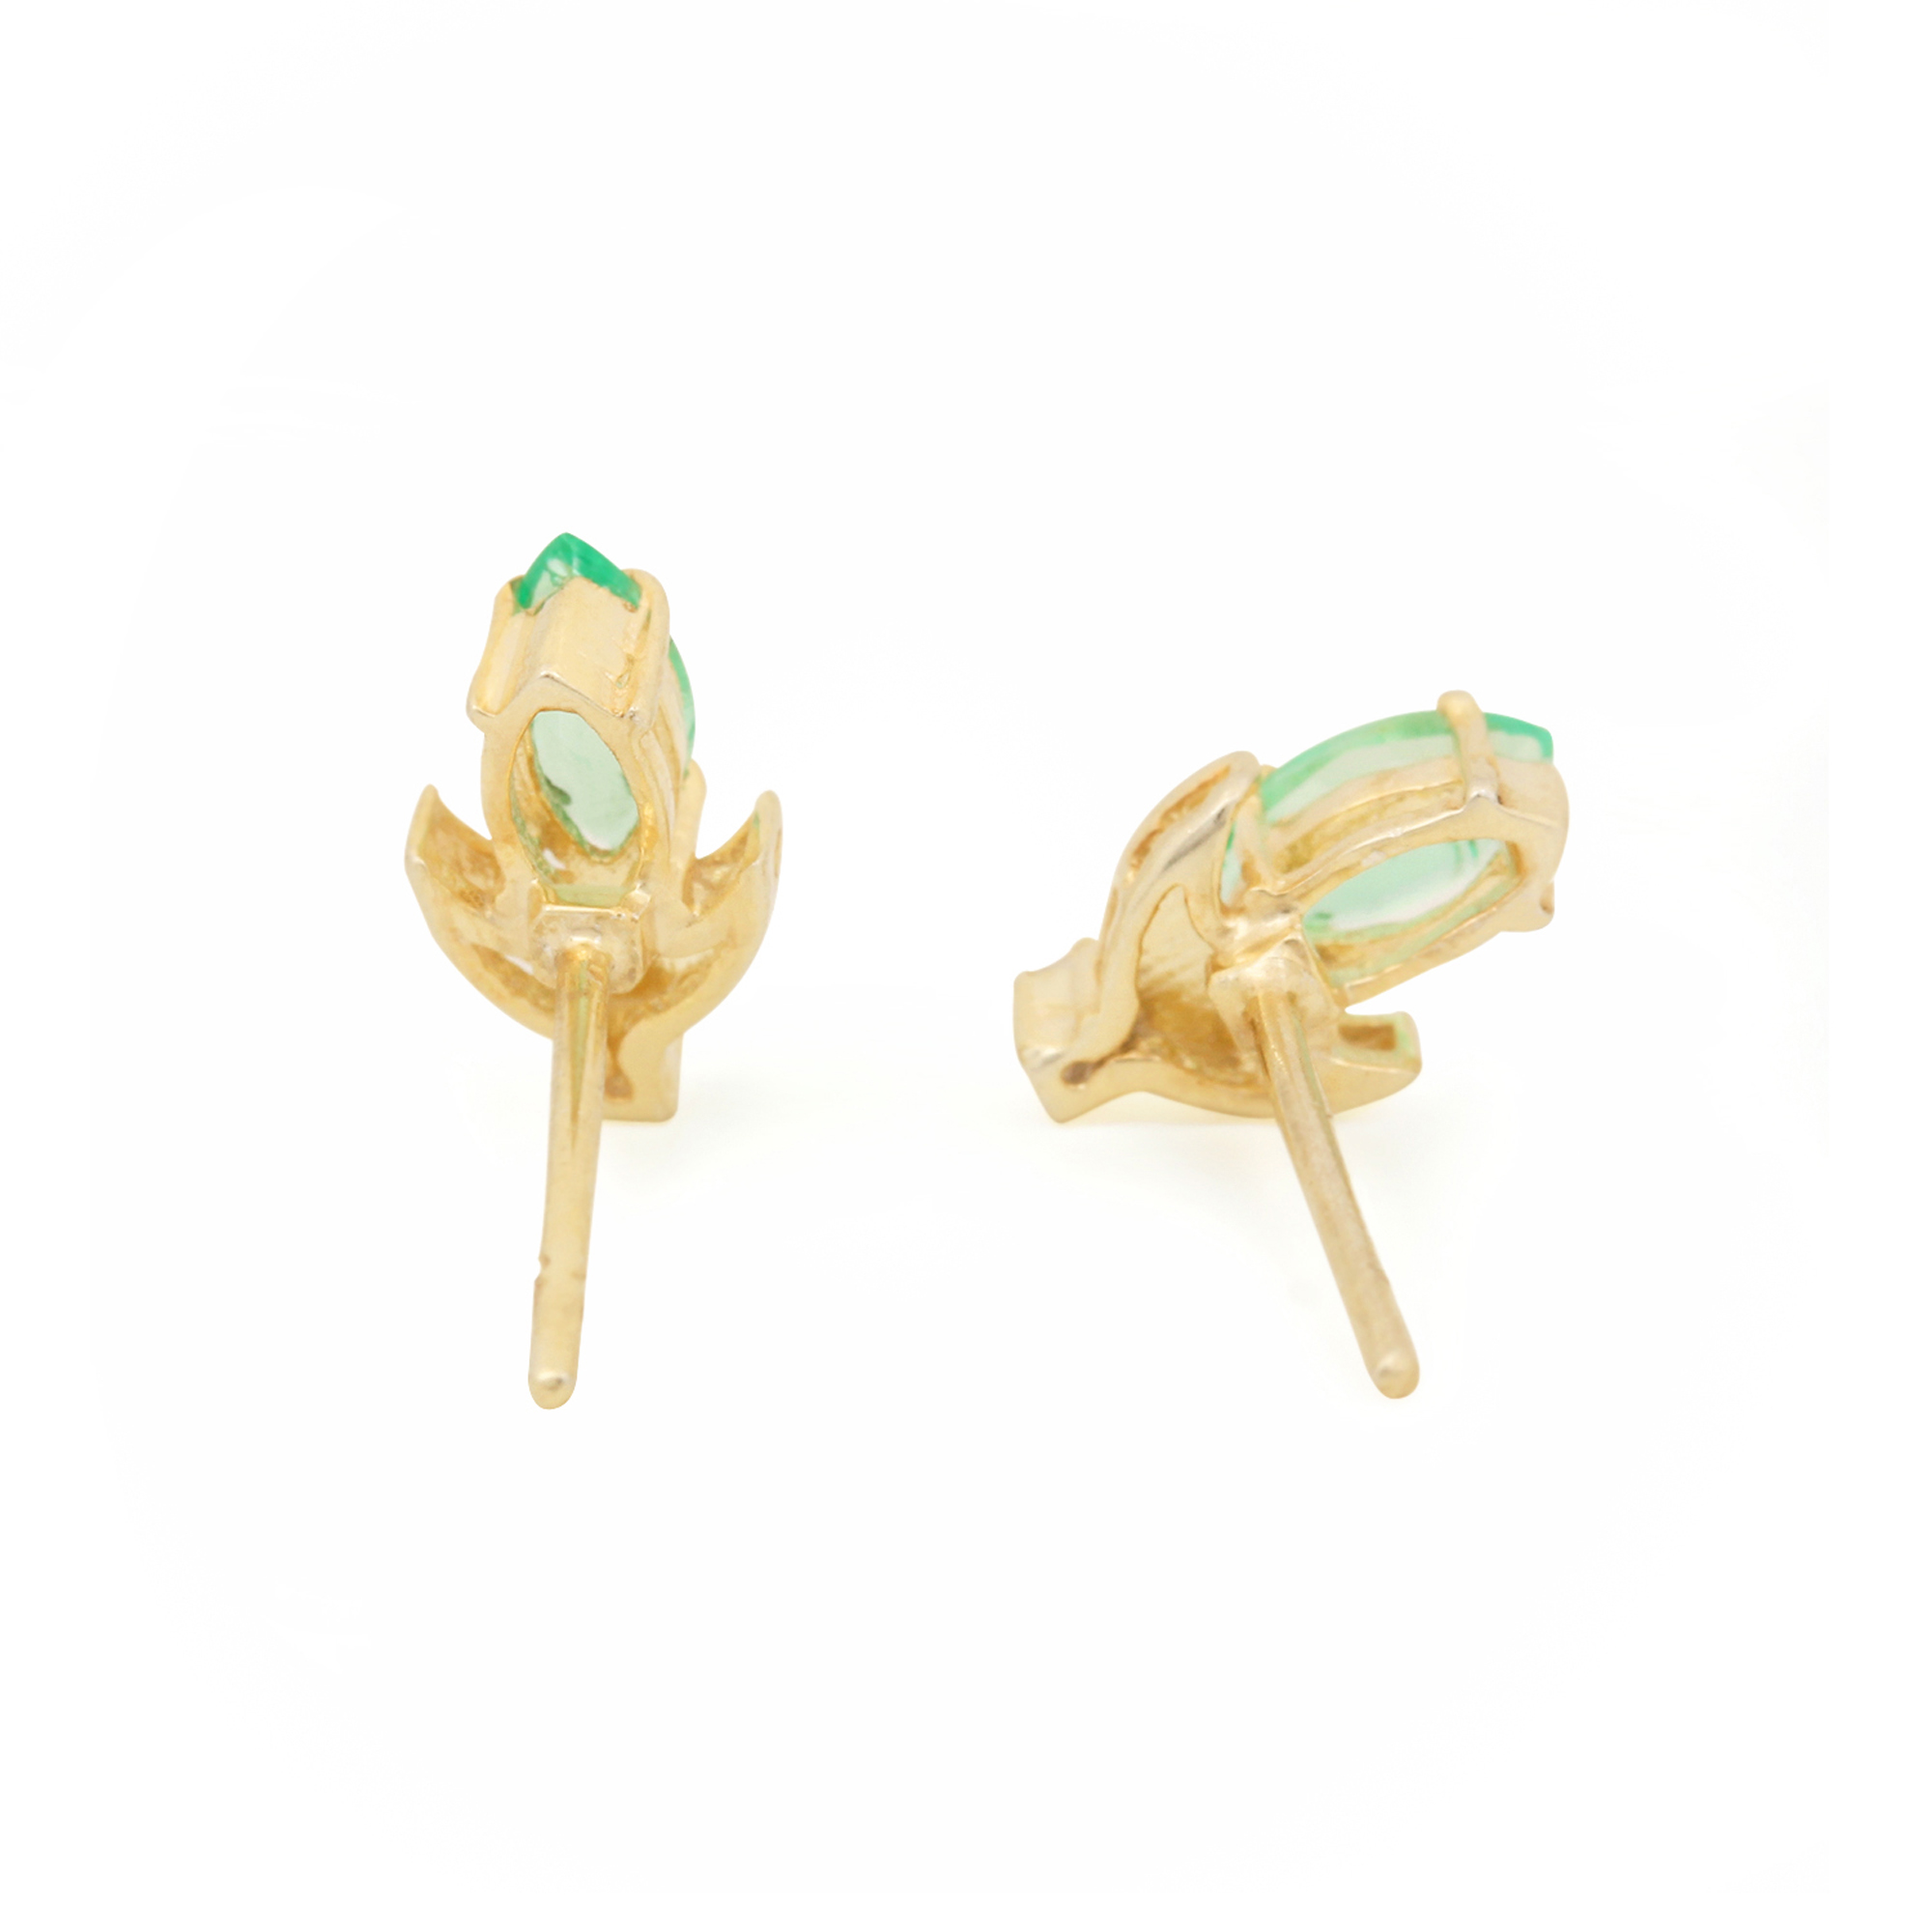 14k Solid Gold Natural Diamond Emerald Gemstone Stud Earrings